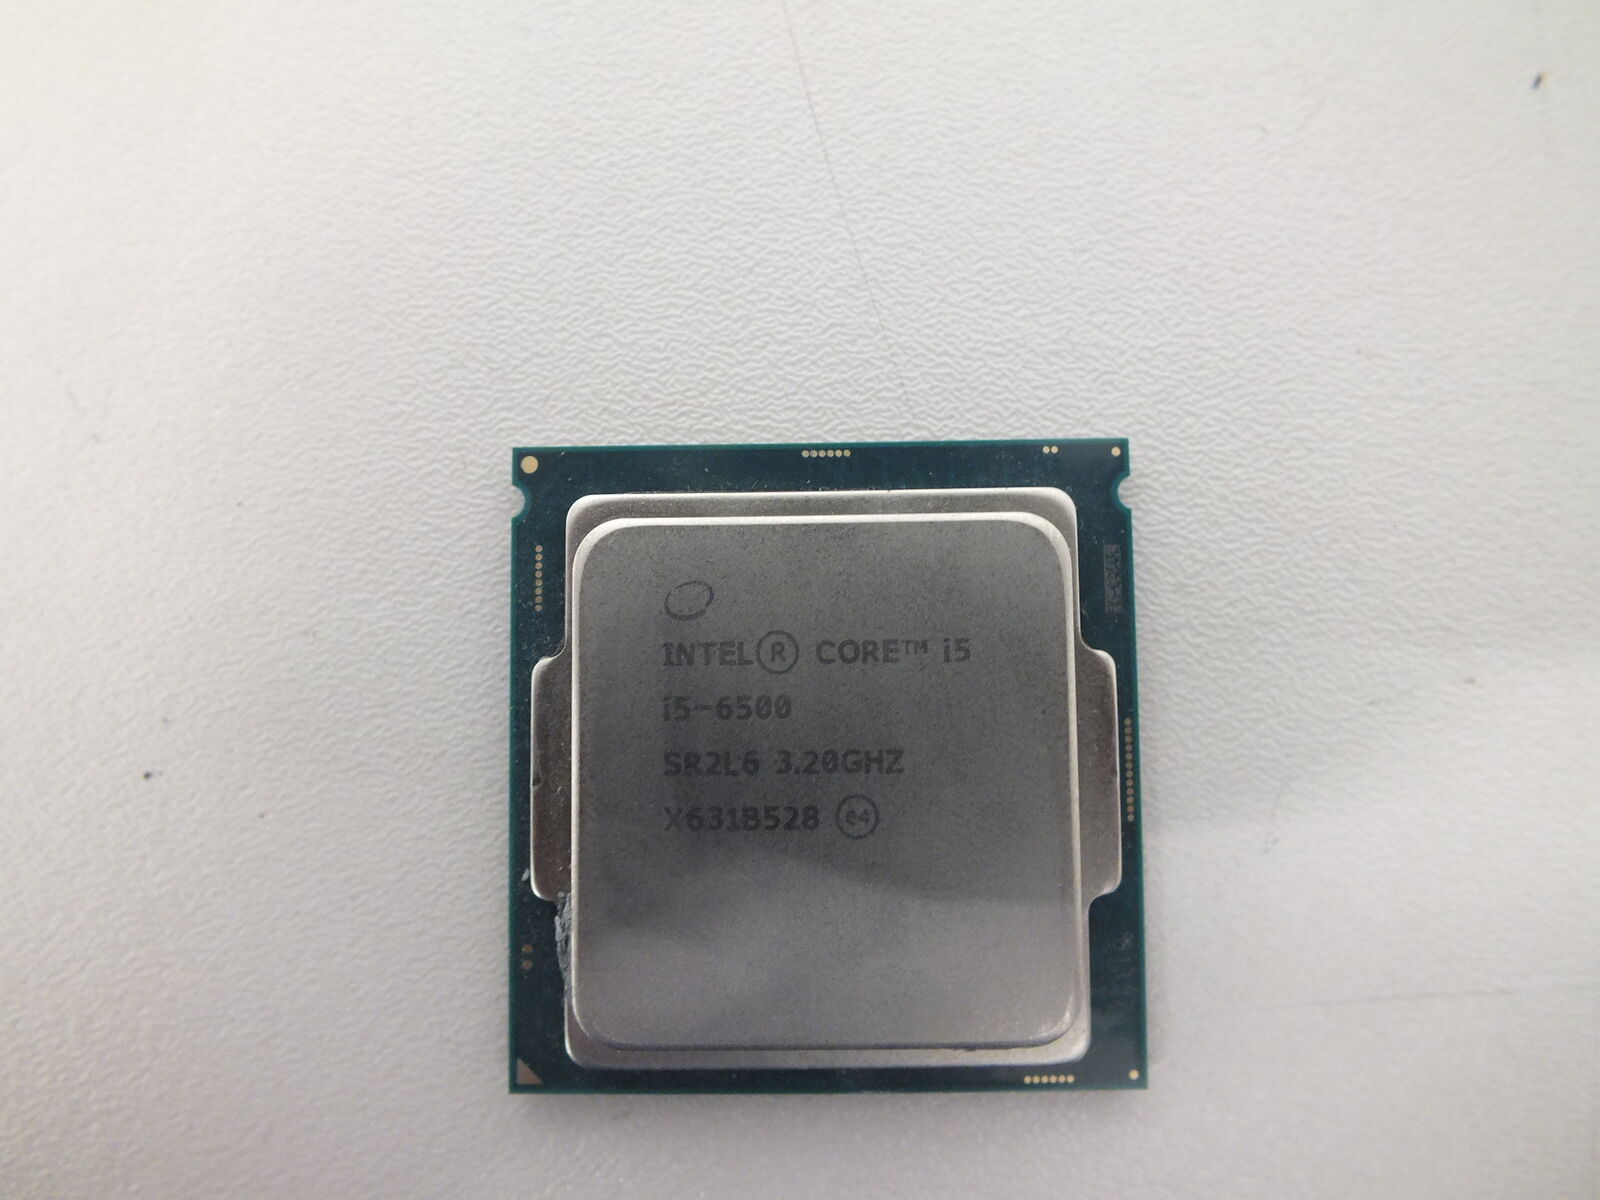 [ LOT OF 6 ] Intel Core i5-6500 SR2L6 3.20 GHZ Processor